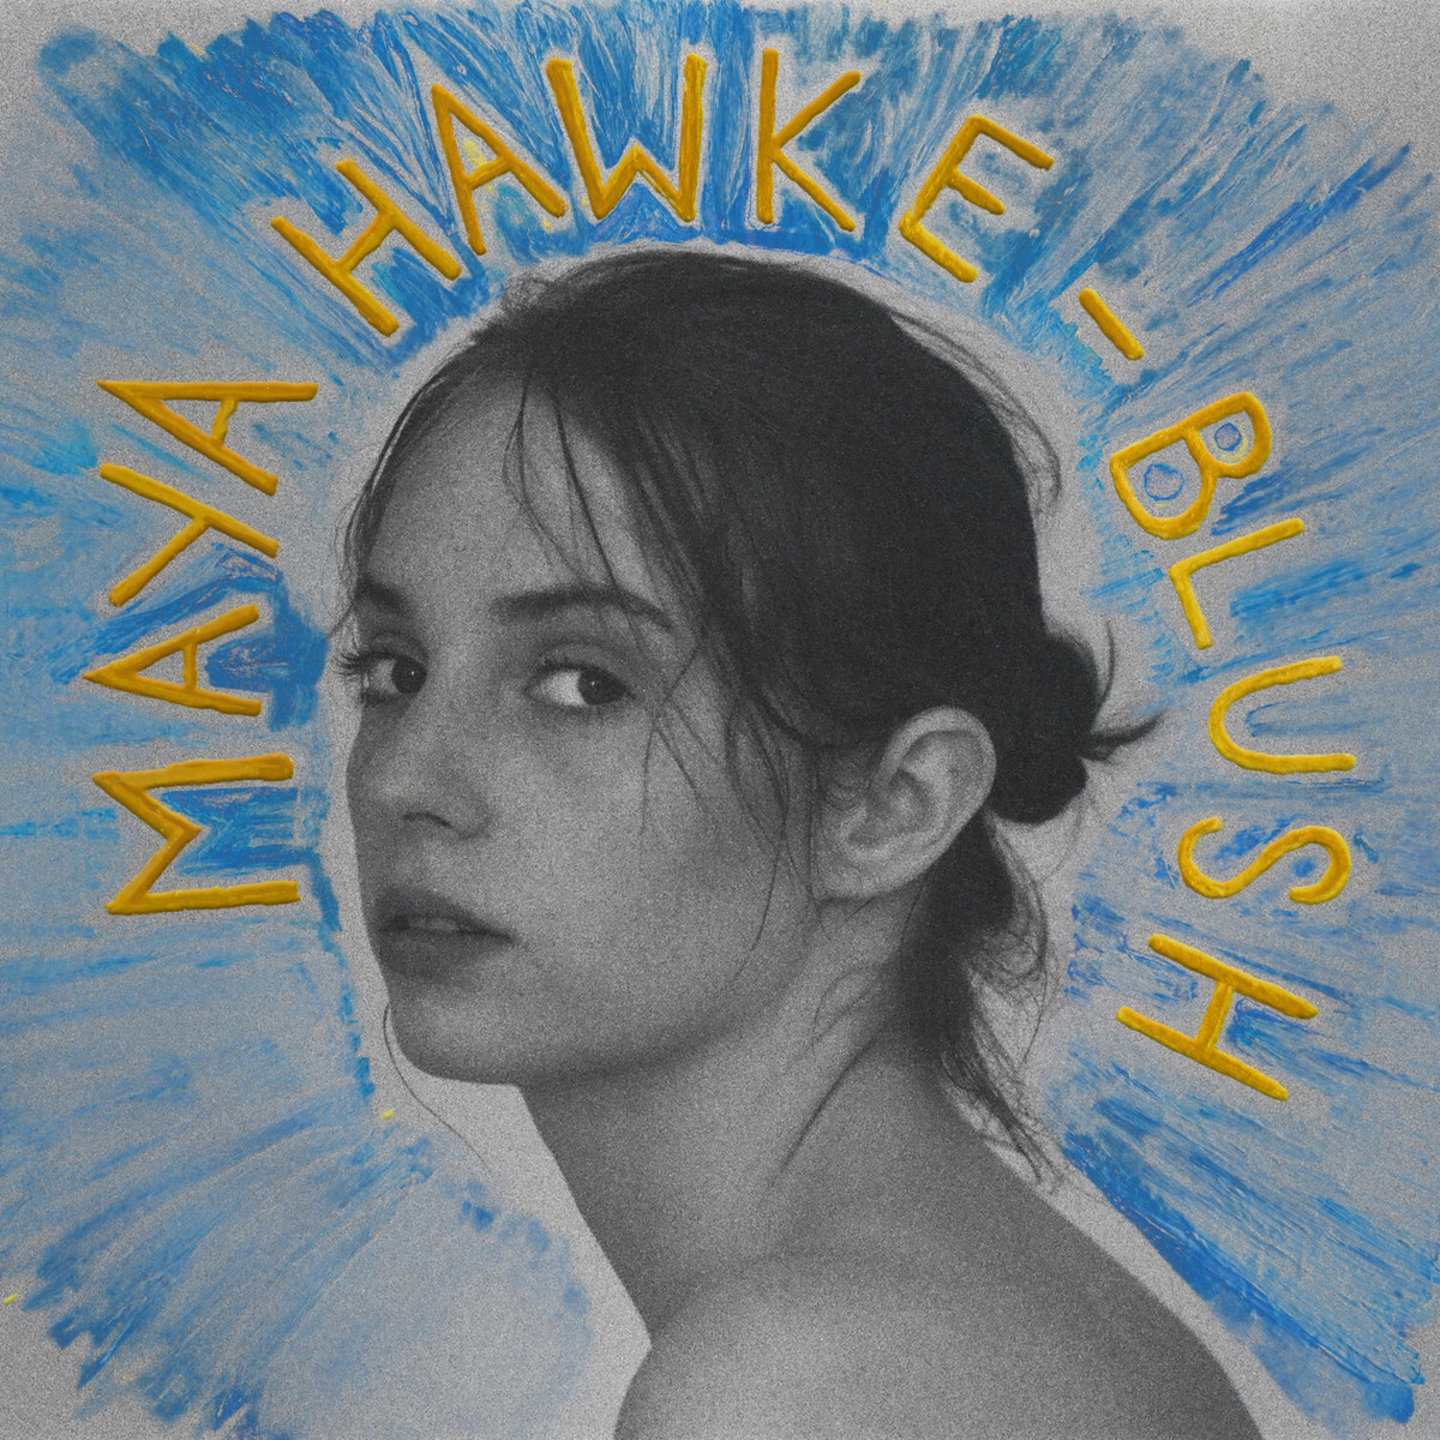 MAYA HAWKE - Blush LP